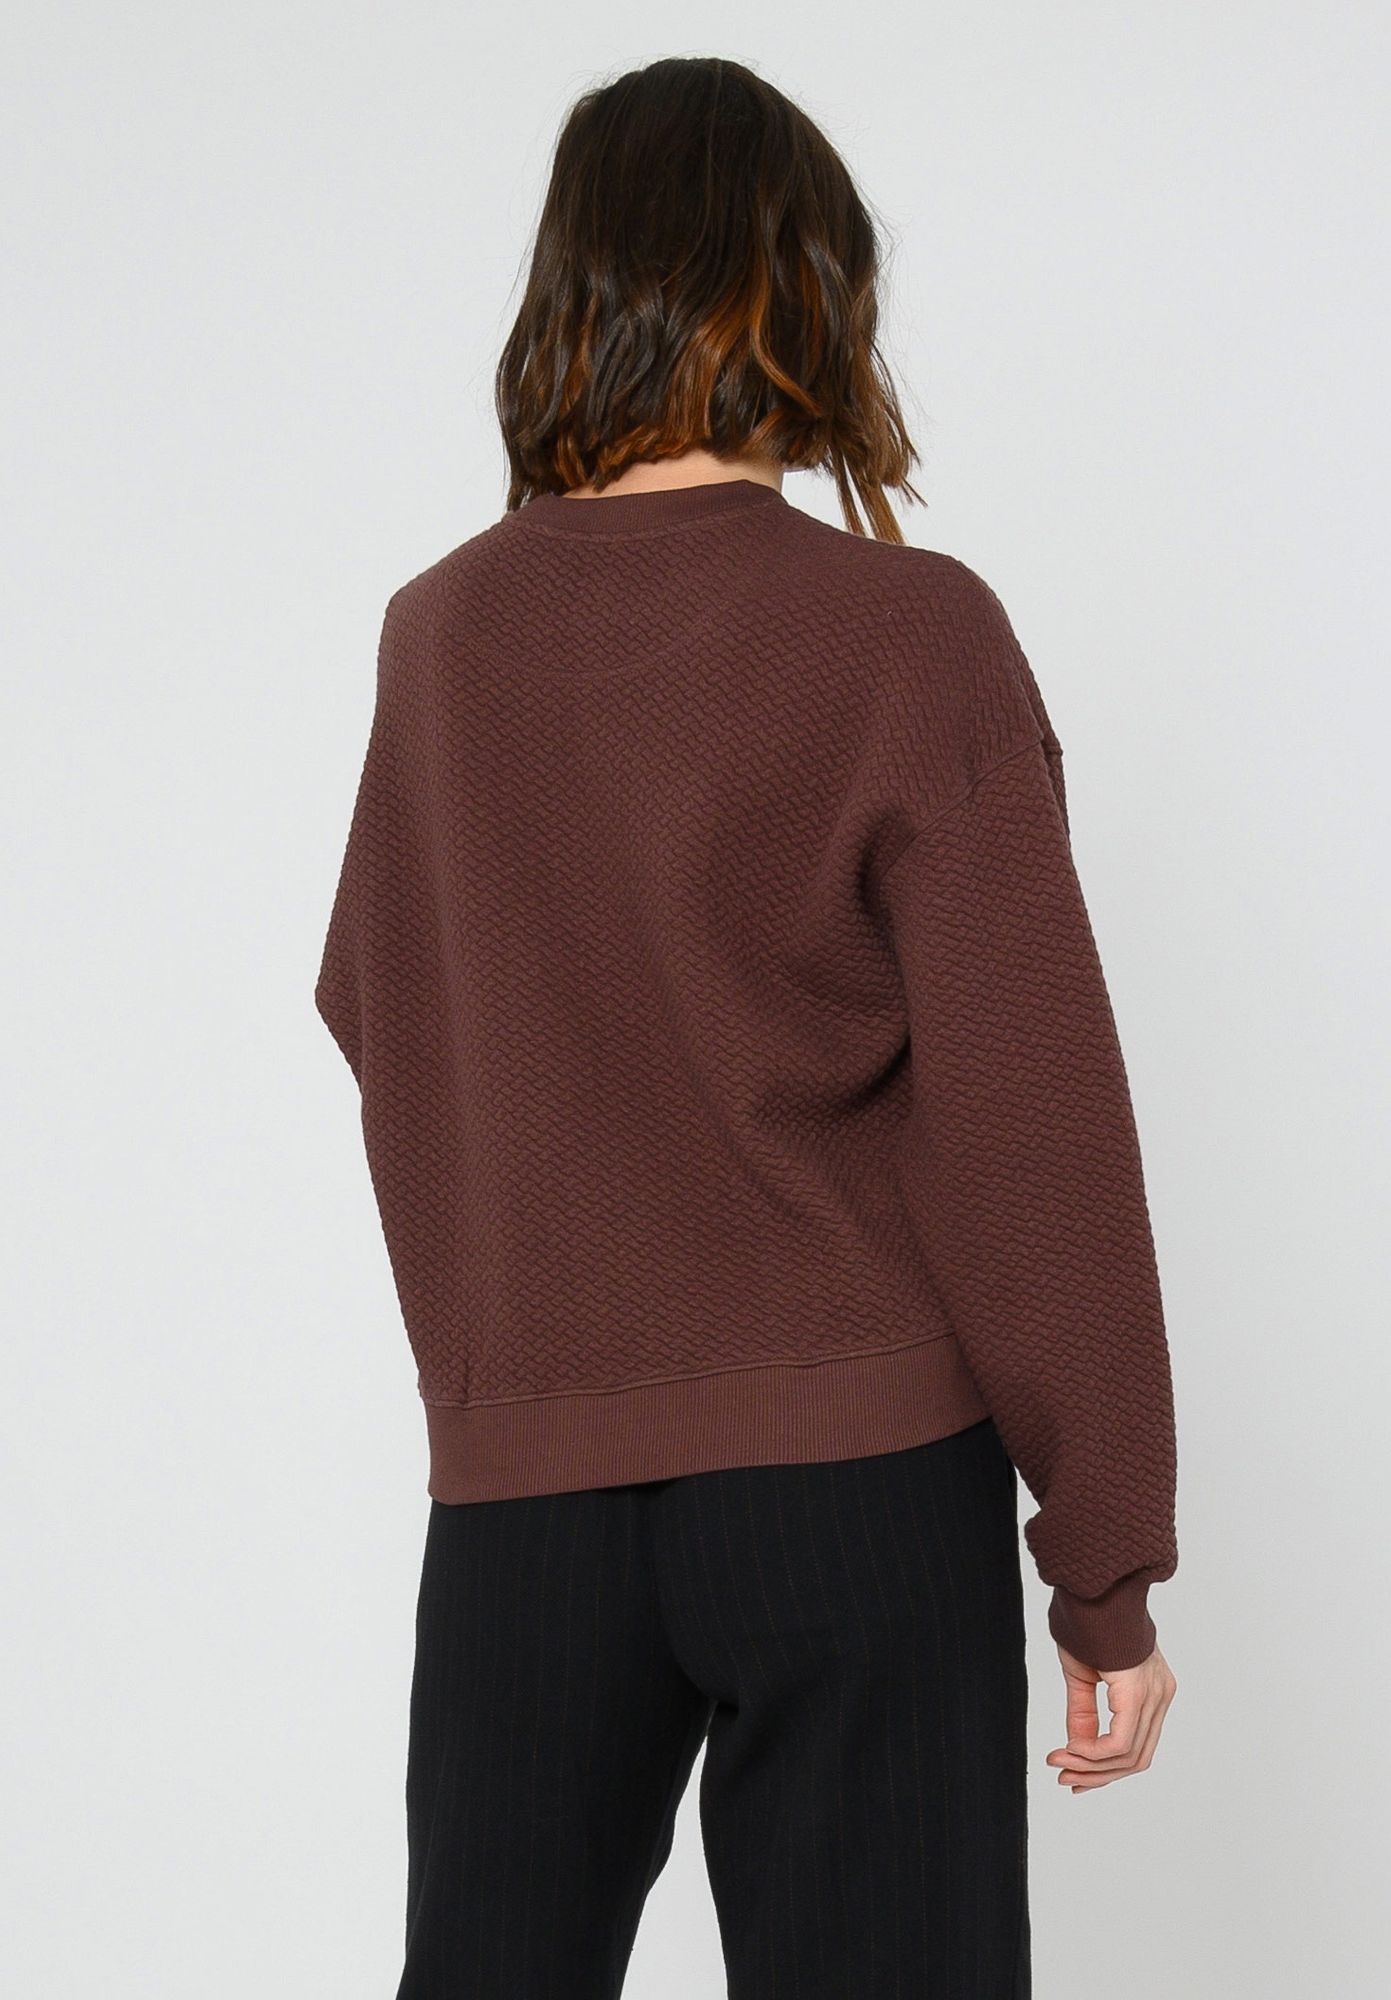 Brown sweater TT1022 made of organic cotton from Thokkthokk